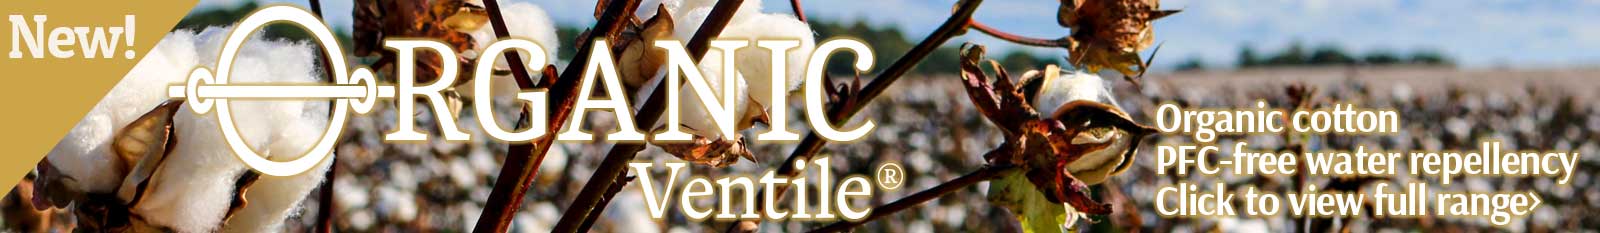 New Hilltrek Organic Ventile range - organic cotton and PFC free water repellency